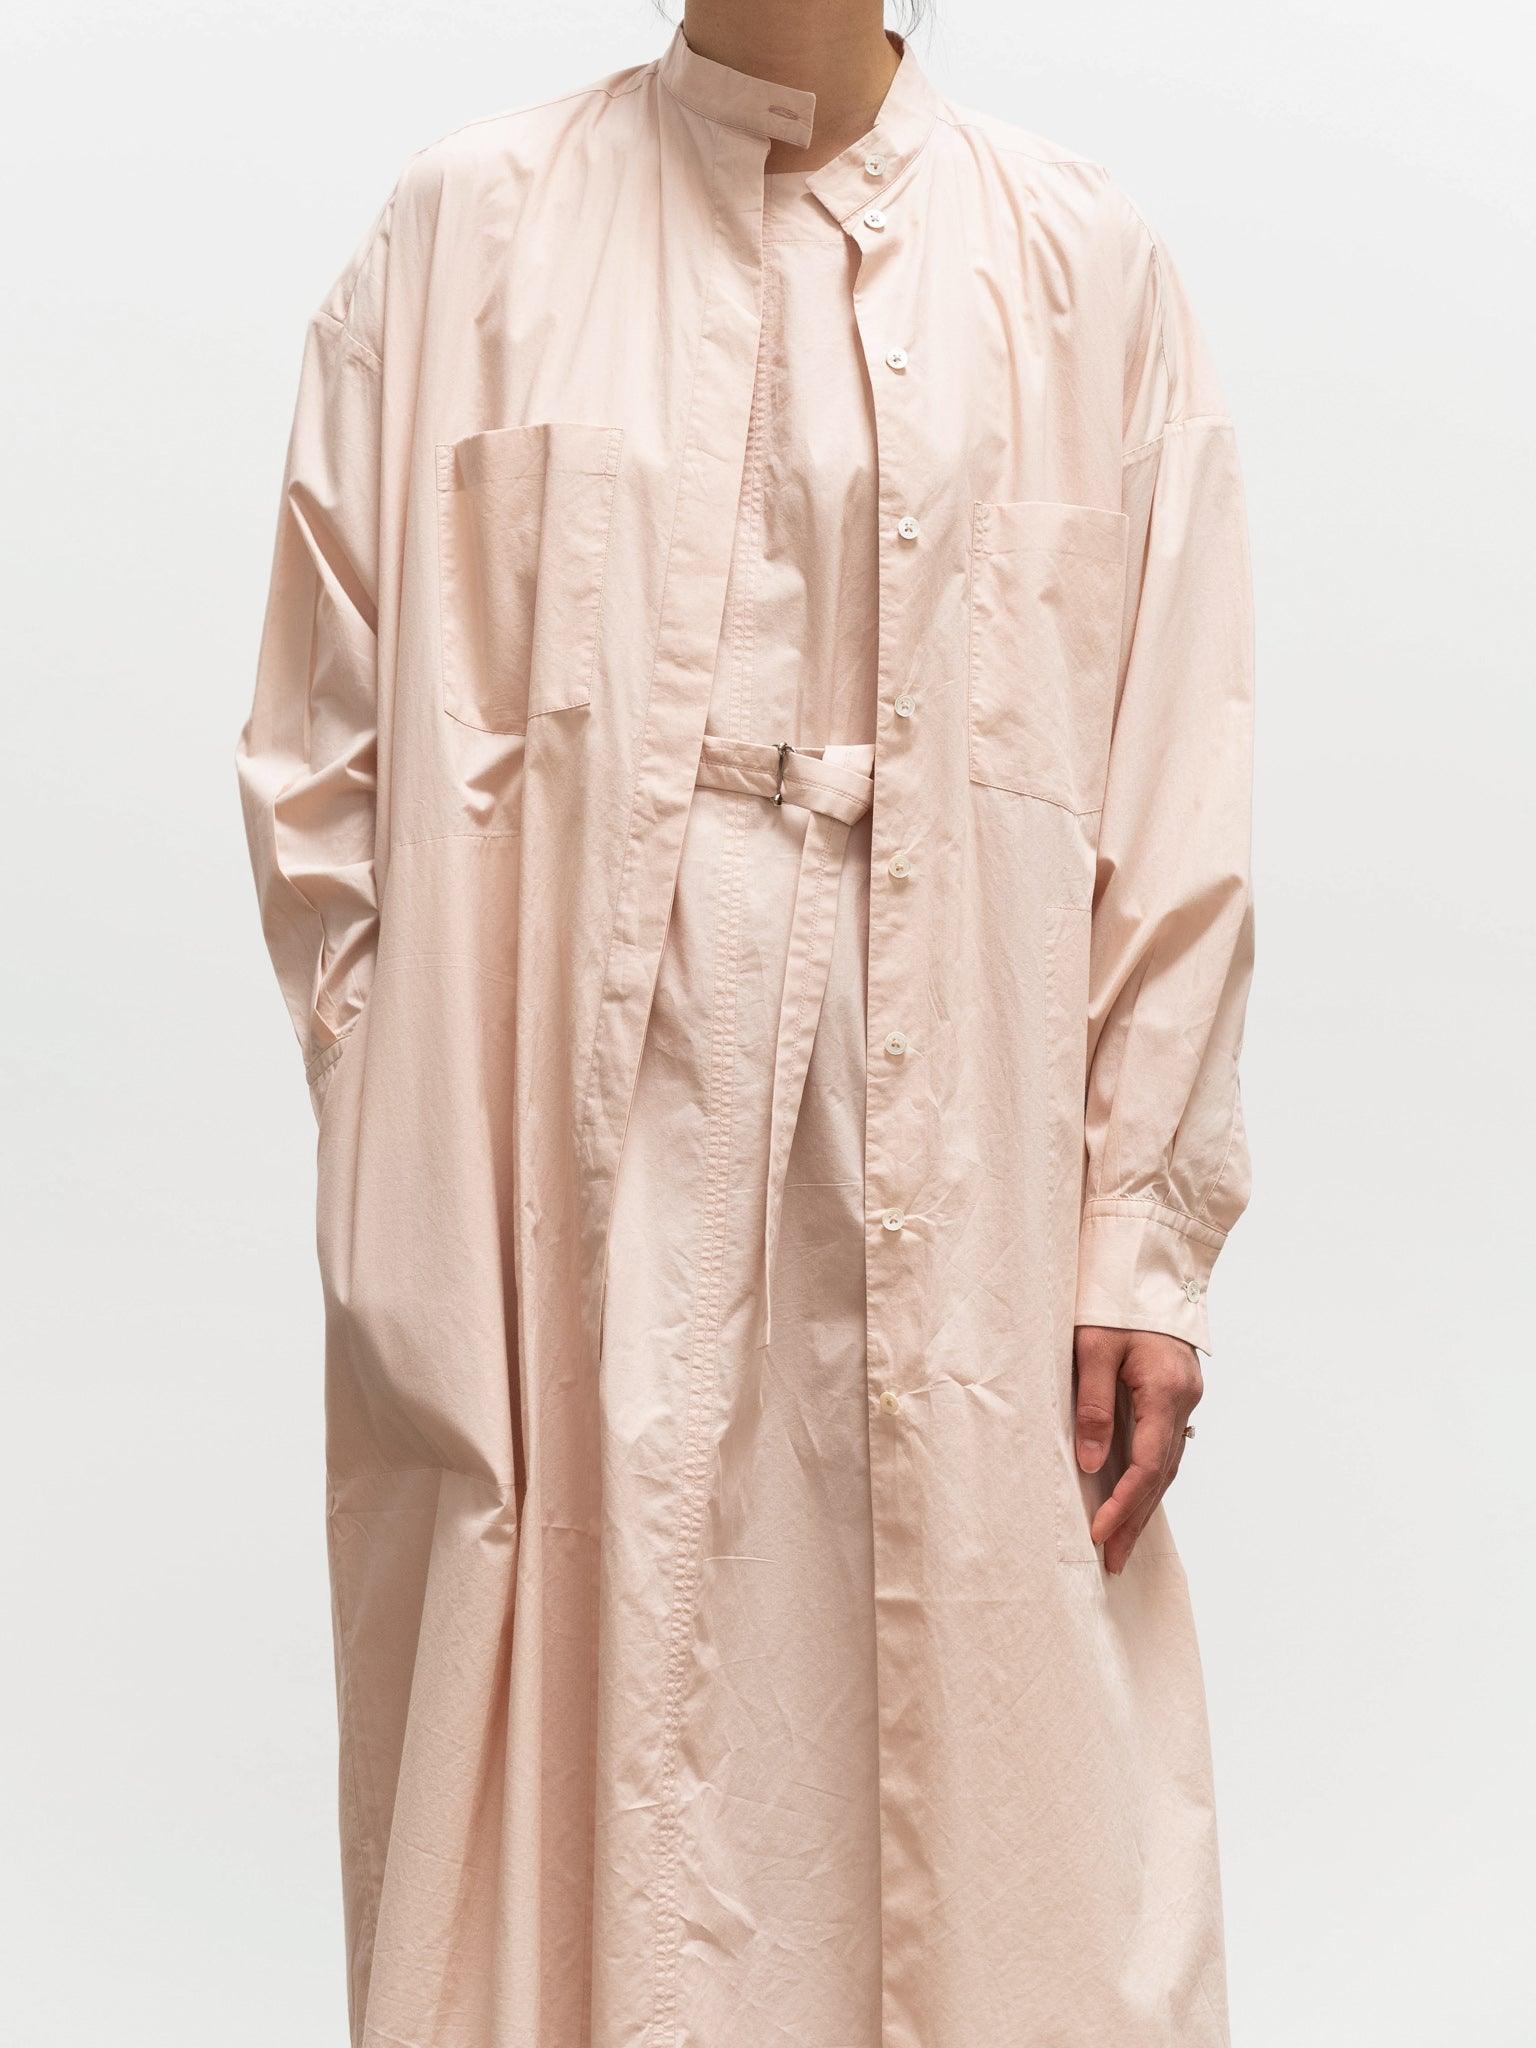 Namu Shop - Jan Machenhauer Igua Shirt Dress - Blush Cotton Poplin